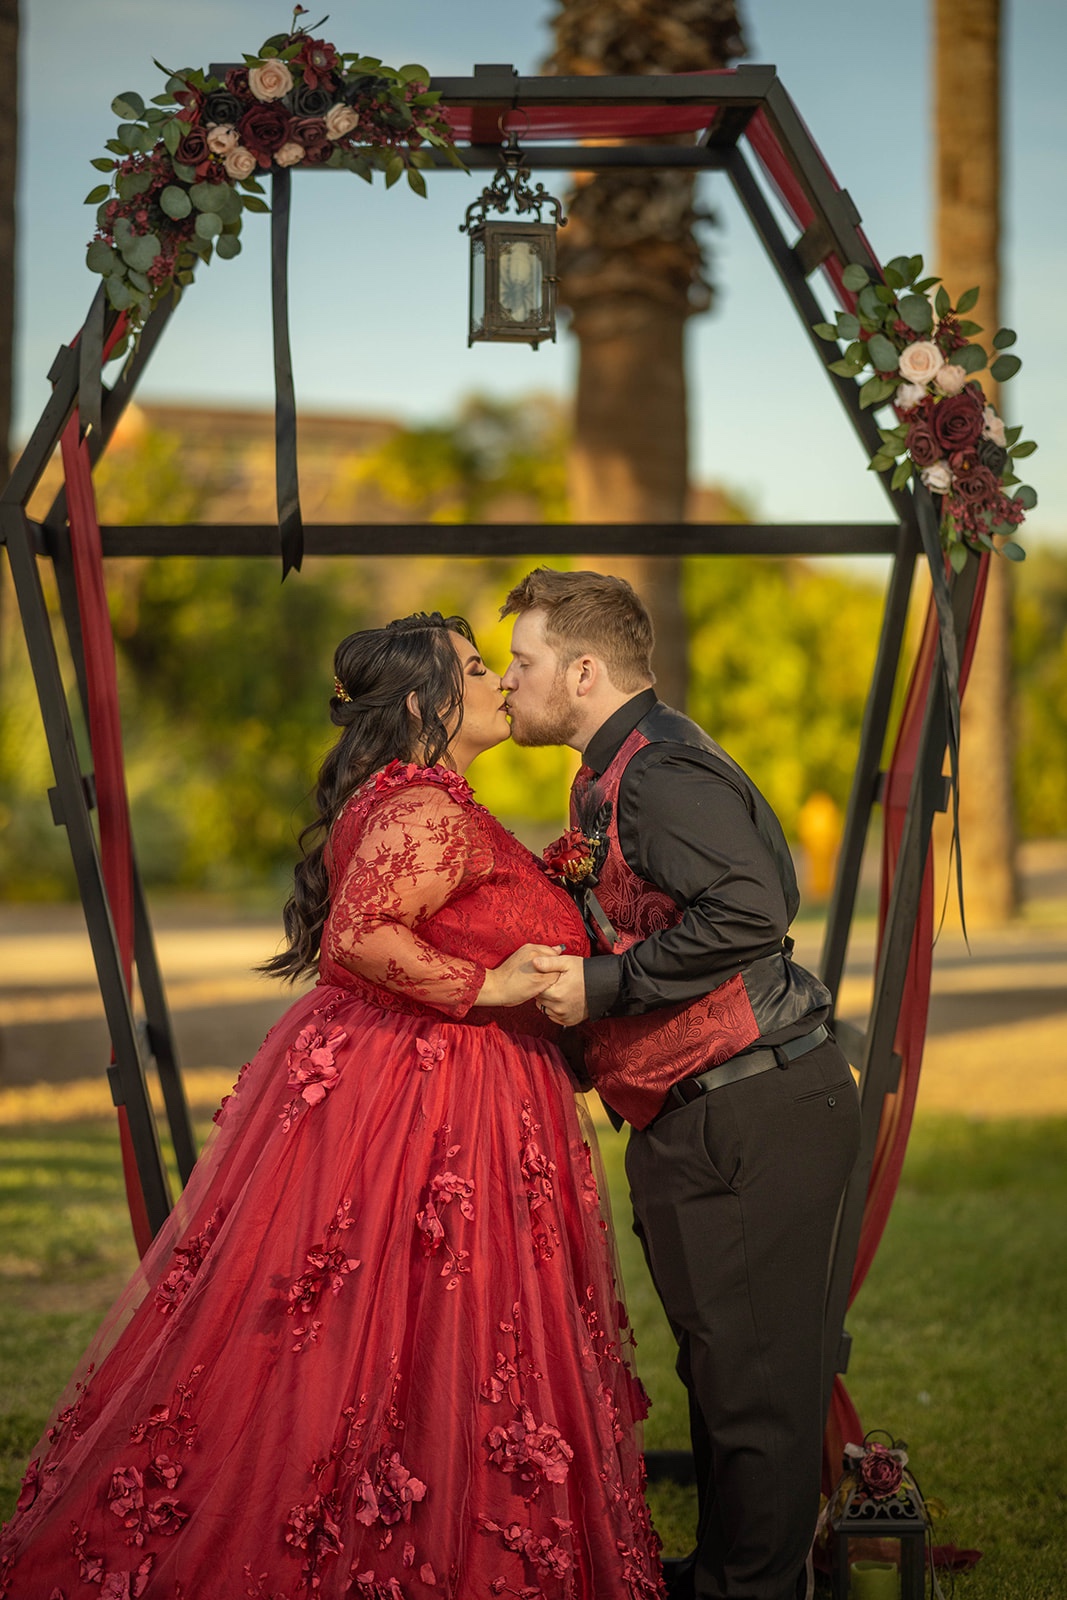 Capturing Love under a Lucky Unlucky Theme: A Friday the 13th Wedding at Sahuaro Ranch Park